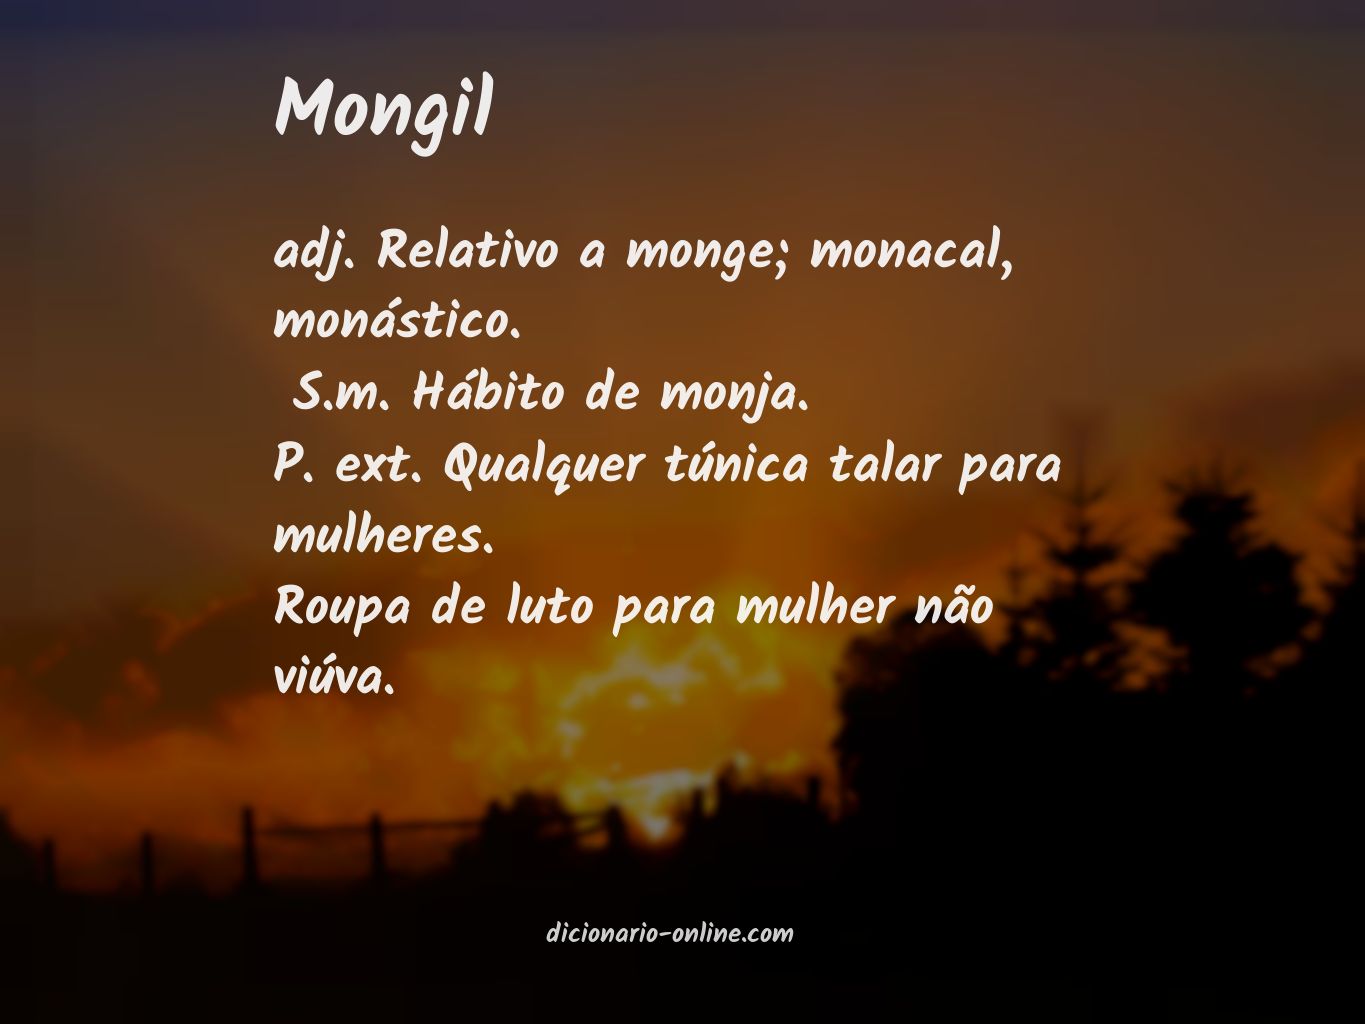 Significado de mongil